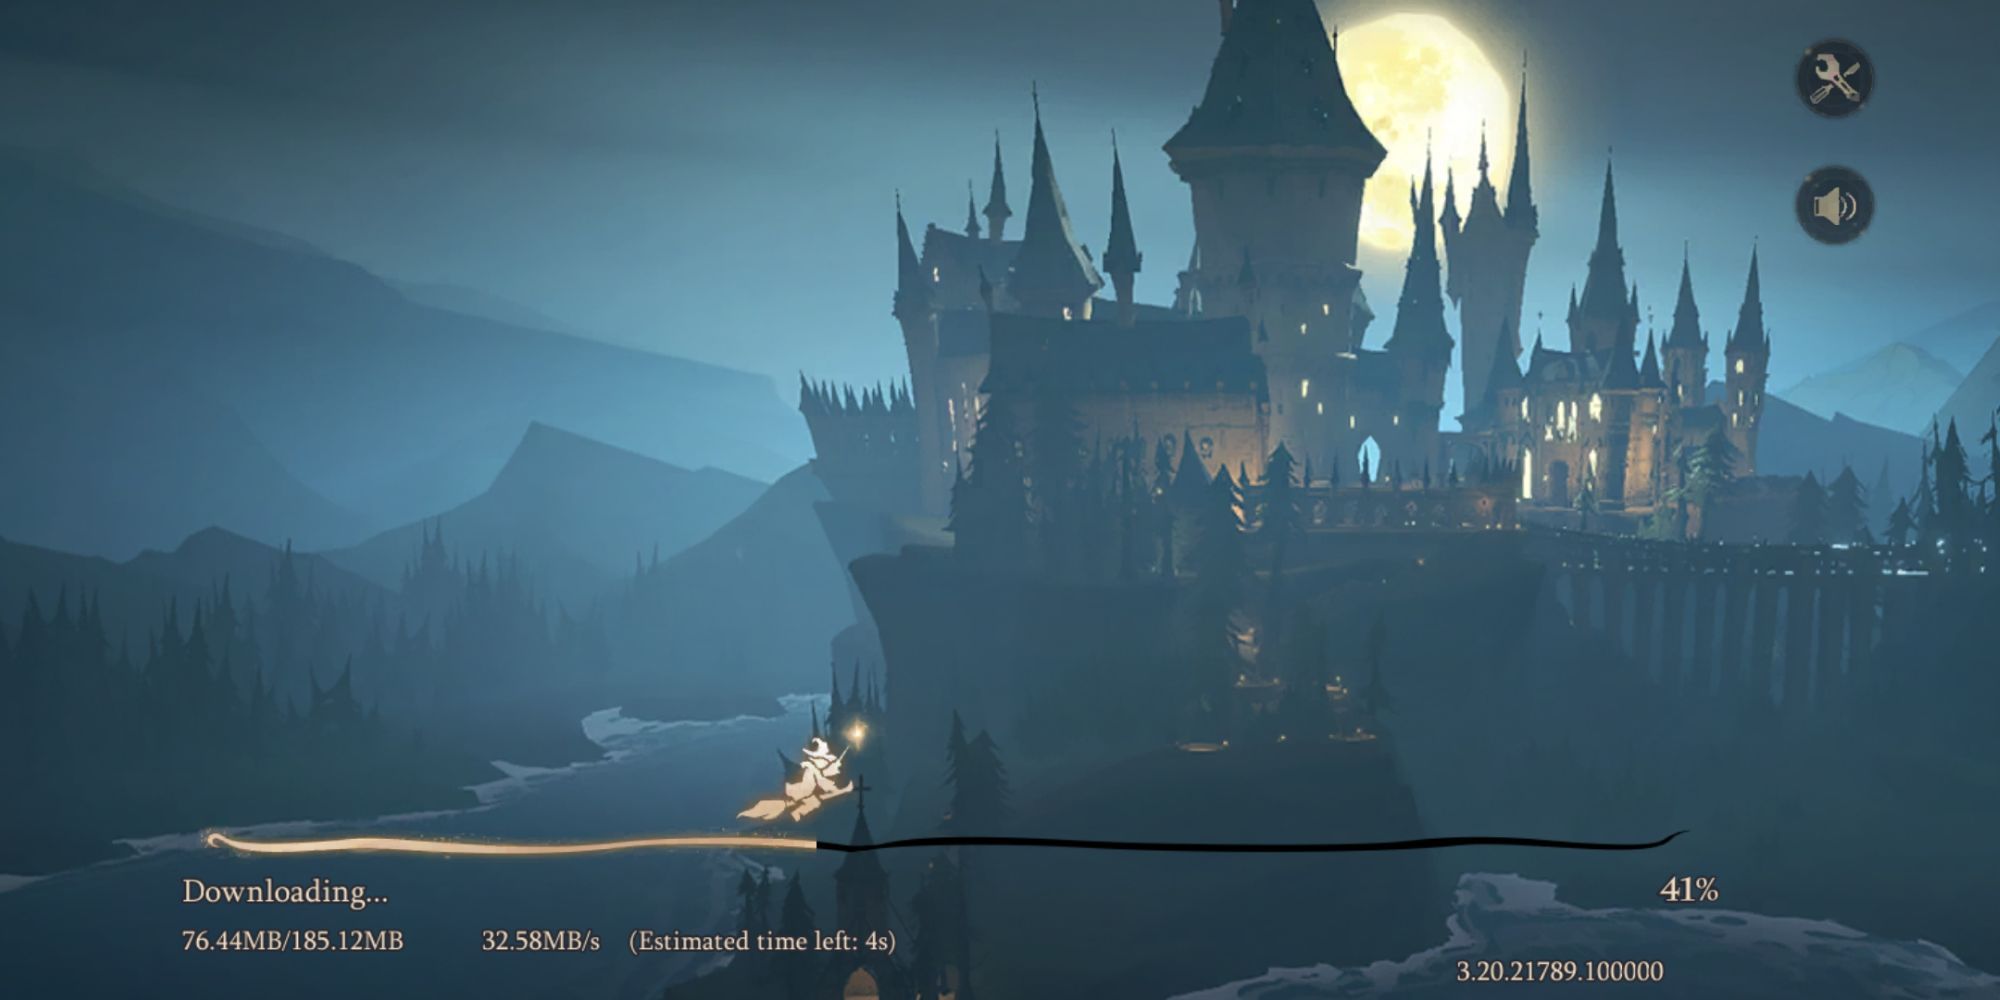 Harry Potter: Magic Awakened Loading Page featuring the Hogwarts Castle